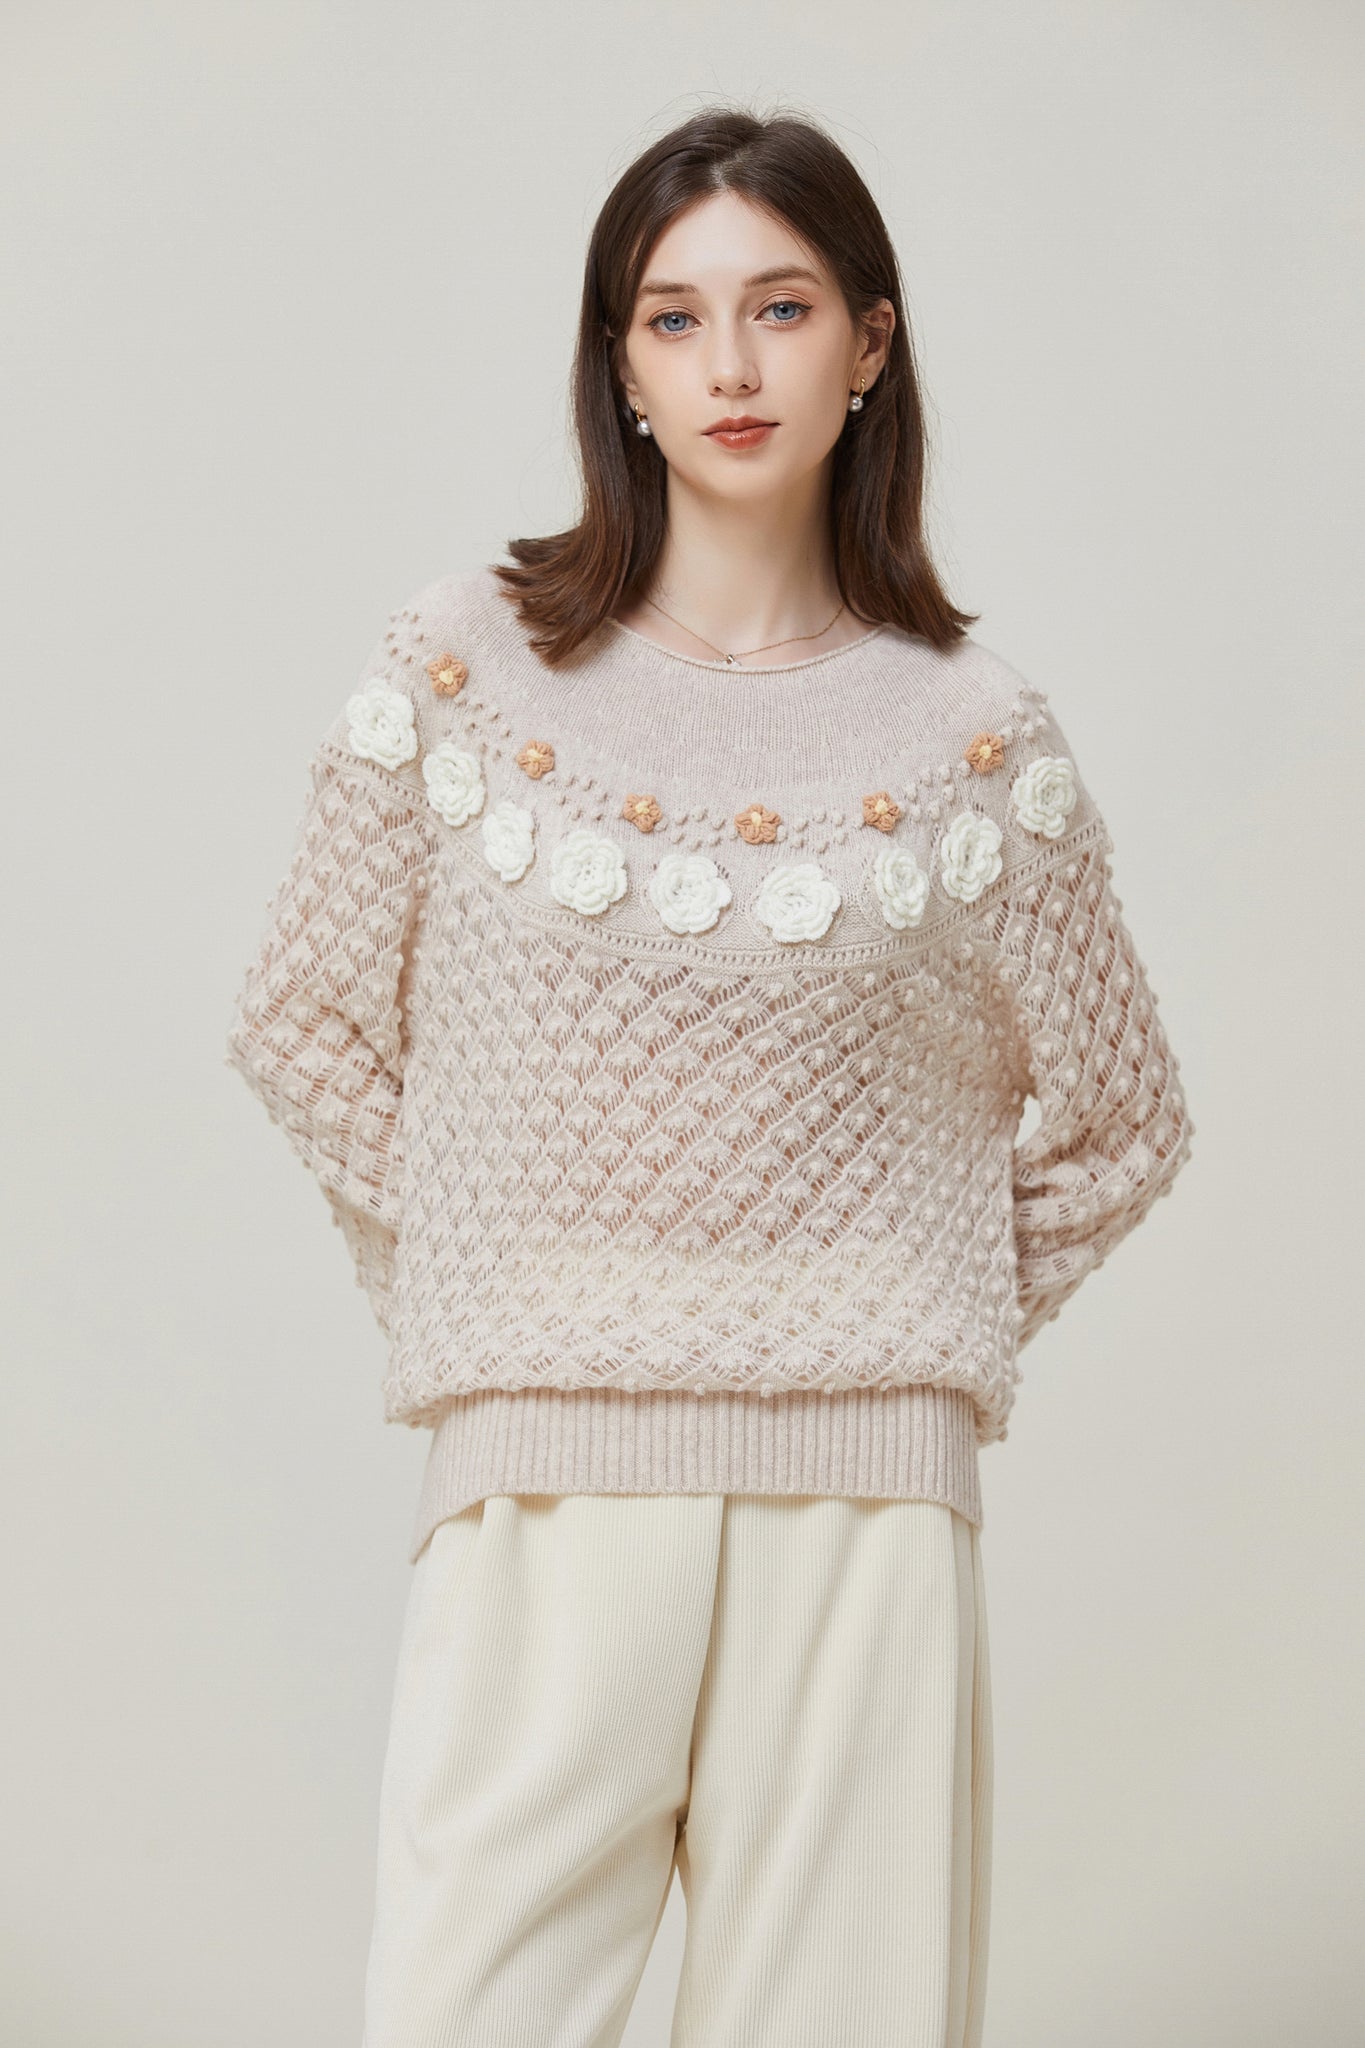 Fangyan | Keller 3D Floral Cashmere Sweater